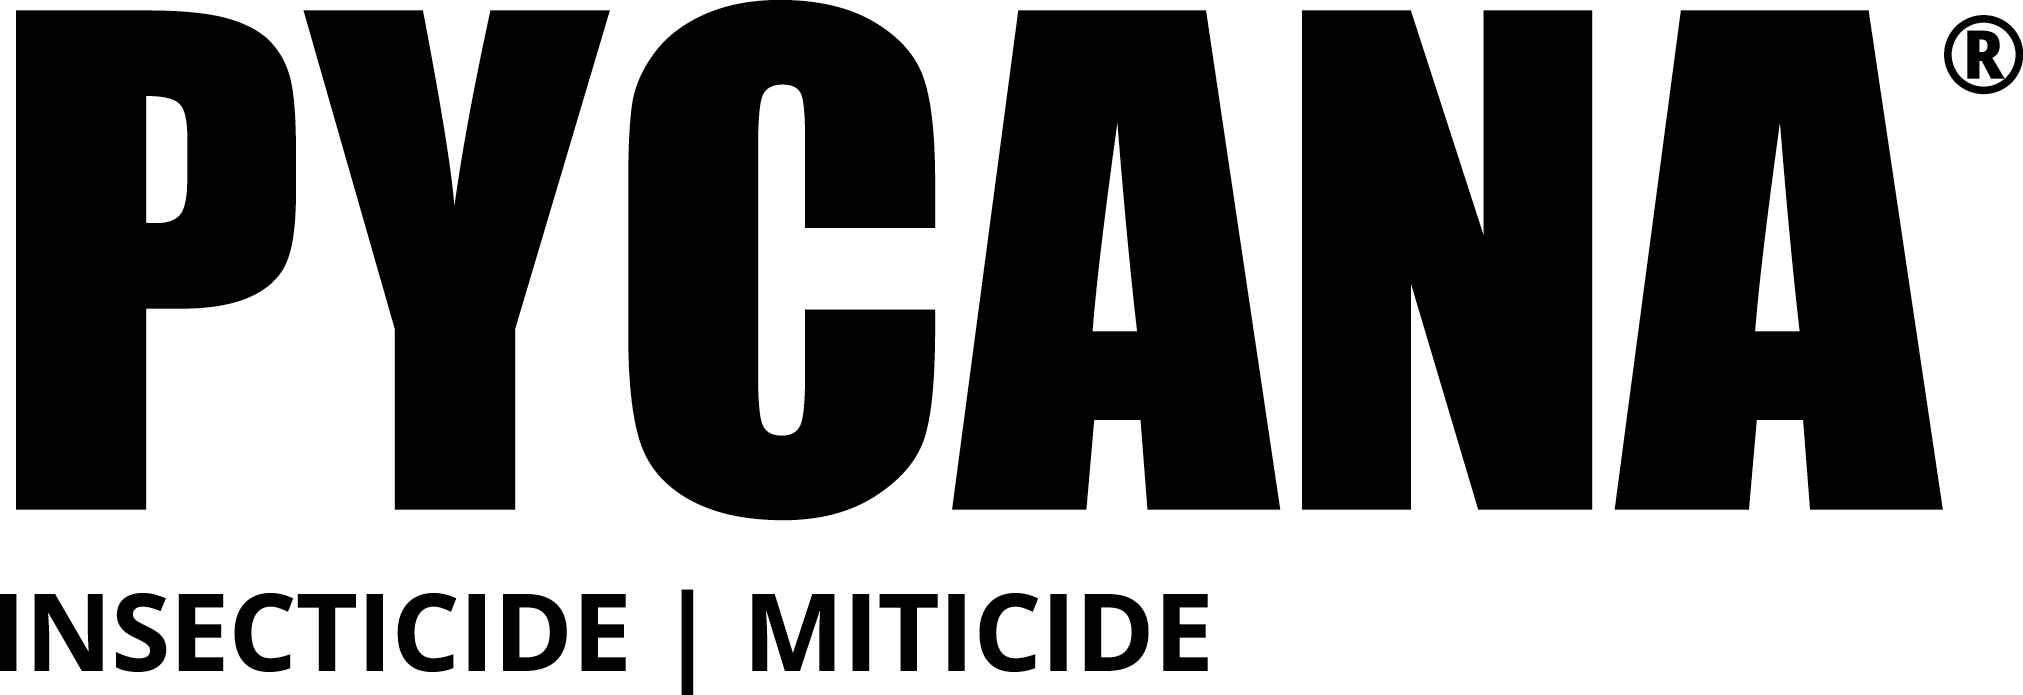 Pycana Insecticide / Miticide